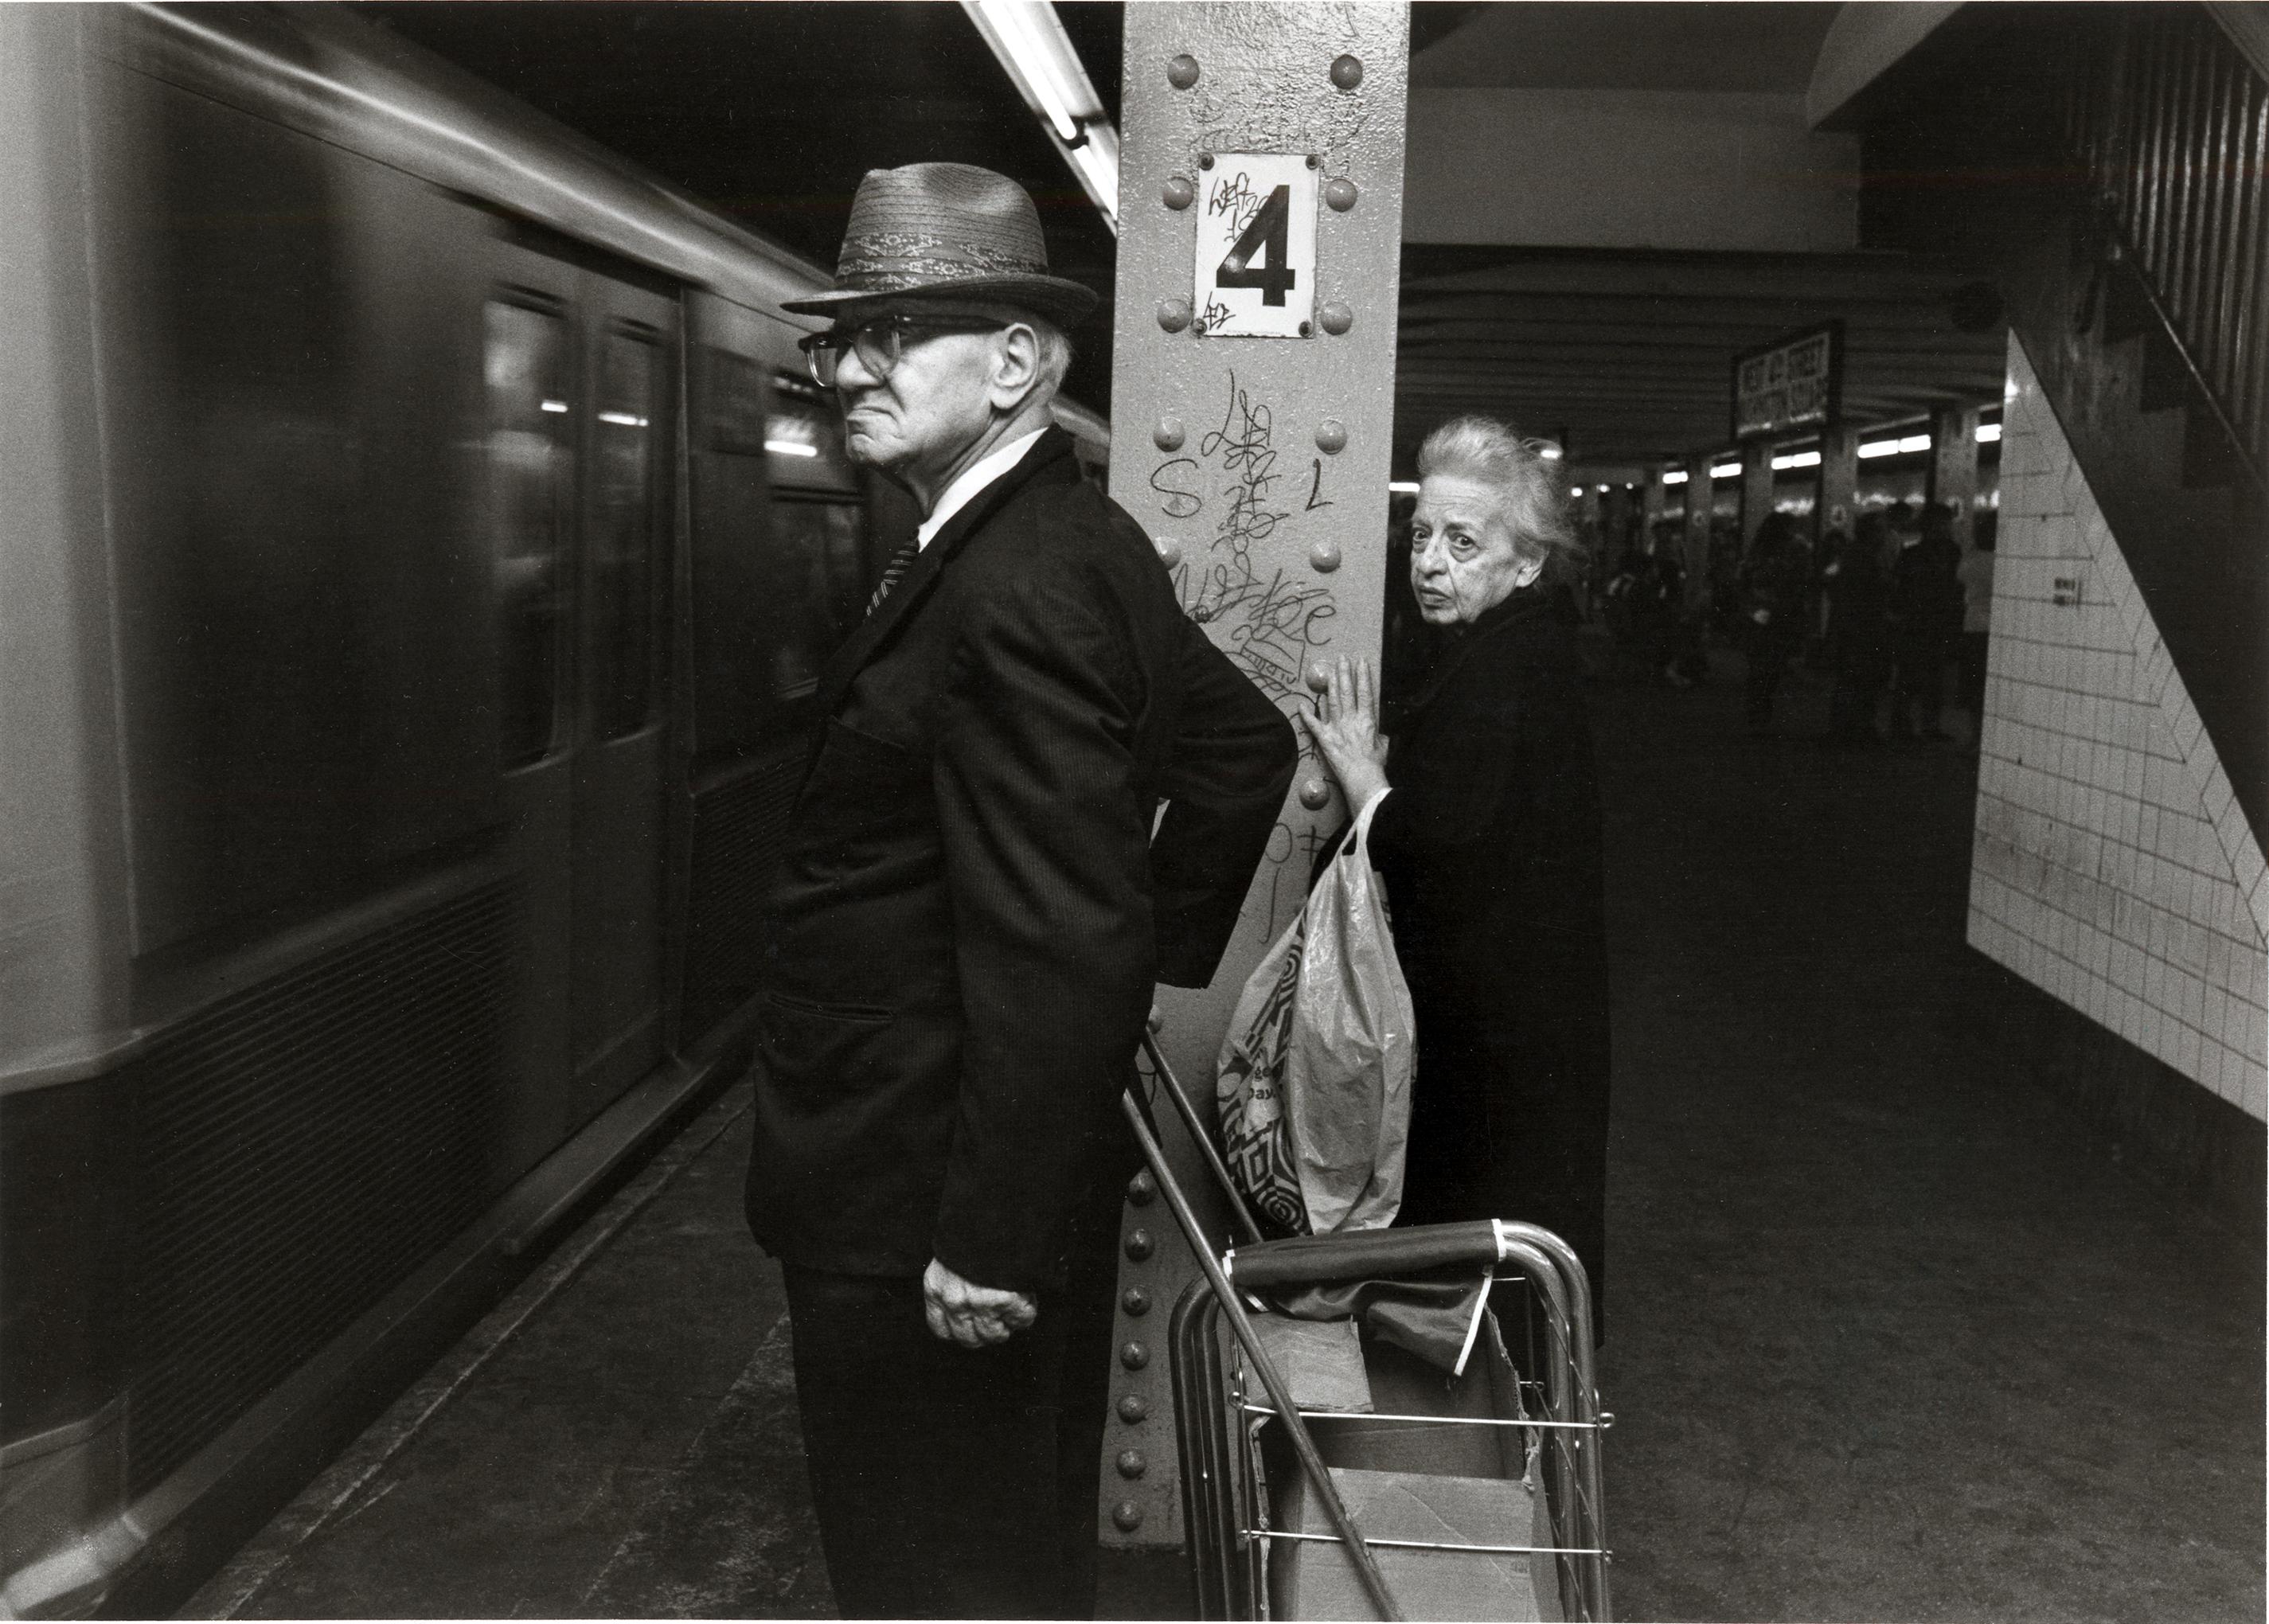 John Conn Figurative Photograph - Subway 31 Black & White, Limited Edition Photograph, NYC, 1980, Unframed